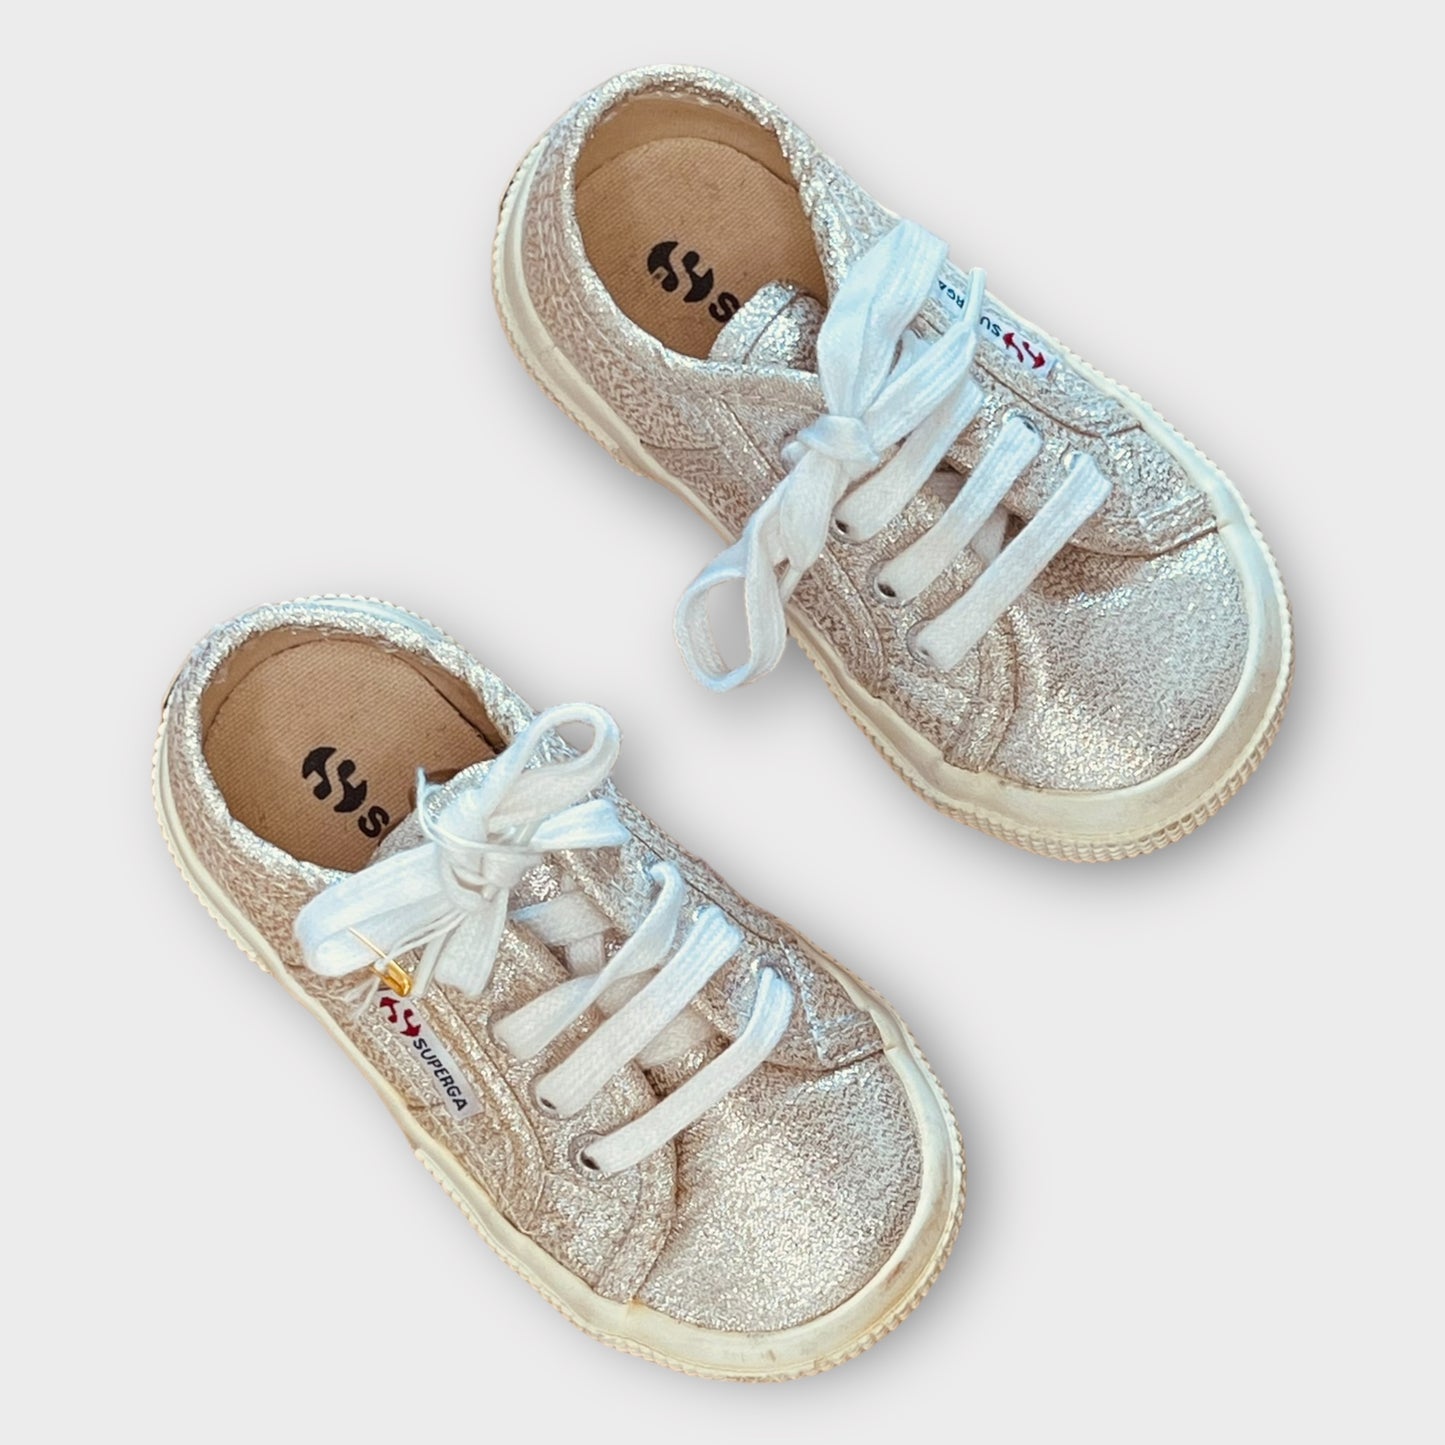 Superga - shoes - 12 months, 18 months, 24 months